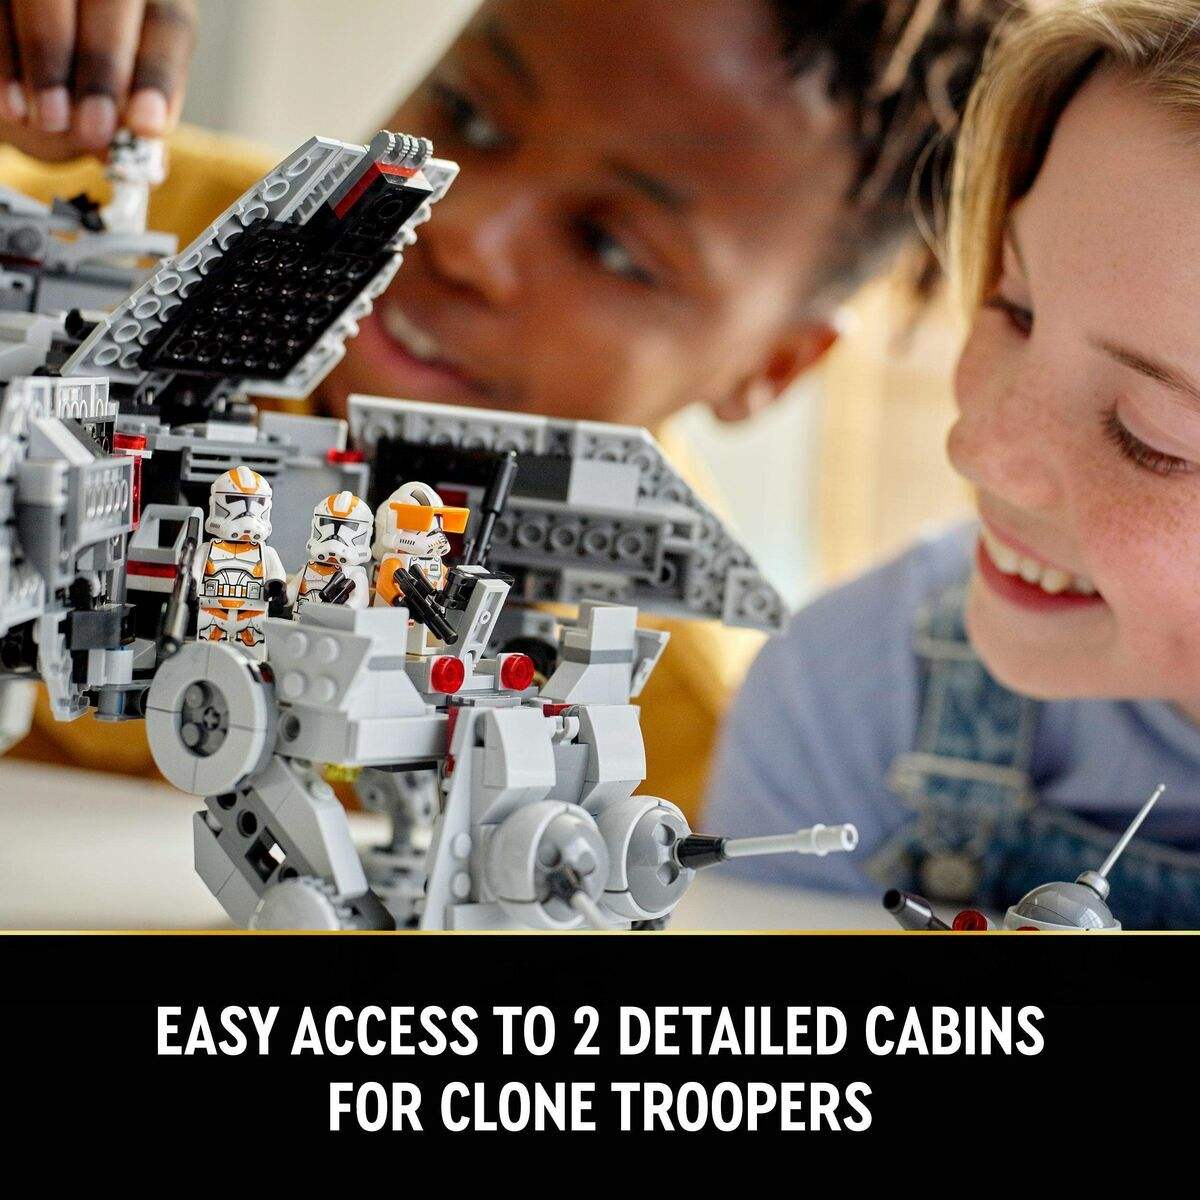 Lego Star Wars 75337 AT-TE Walker         1082 Pièces